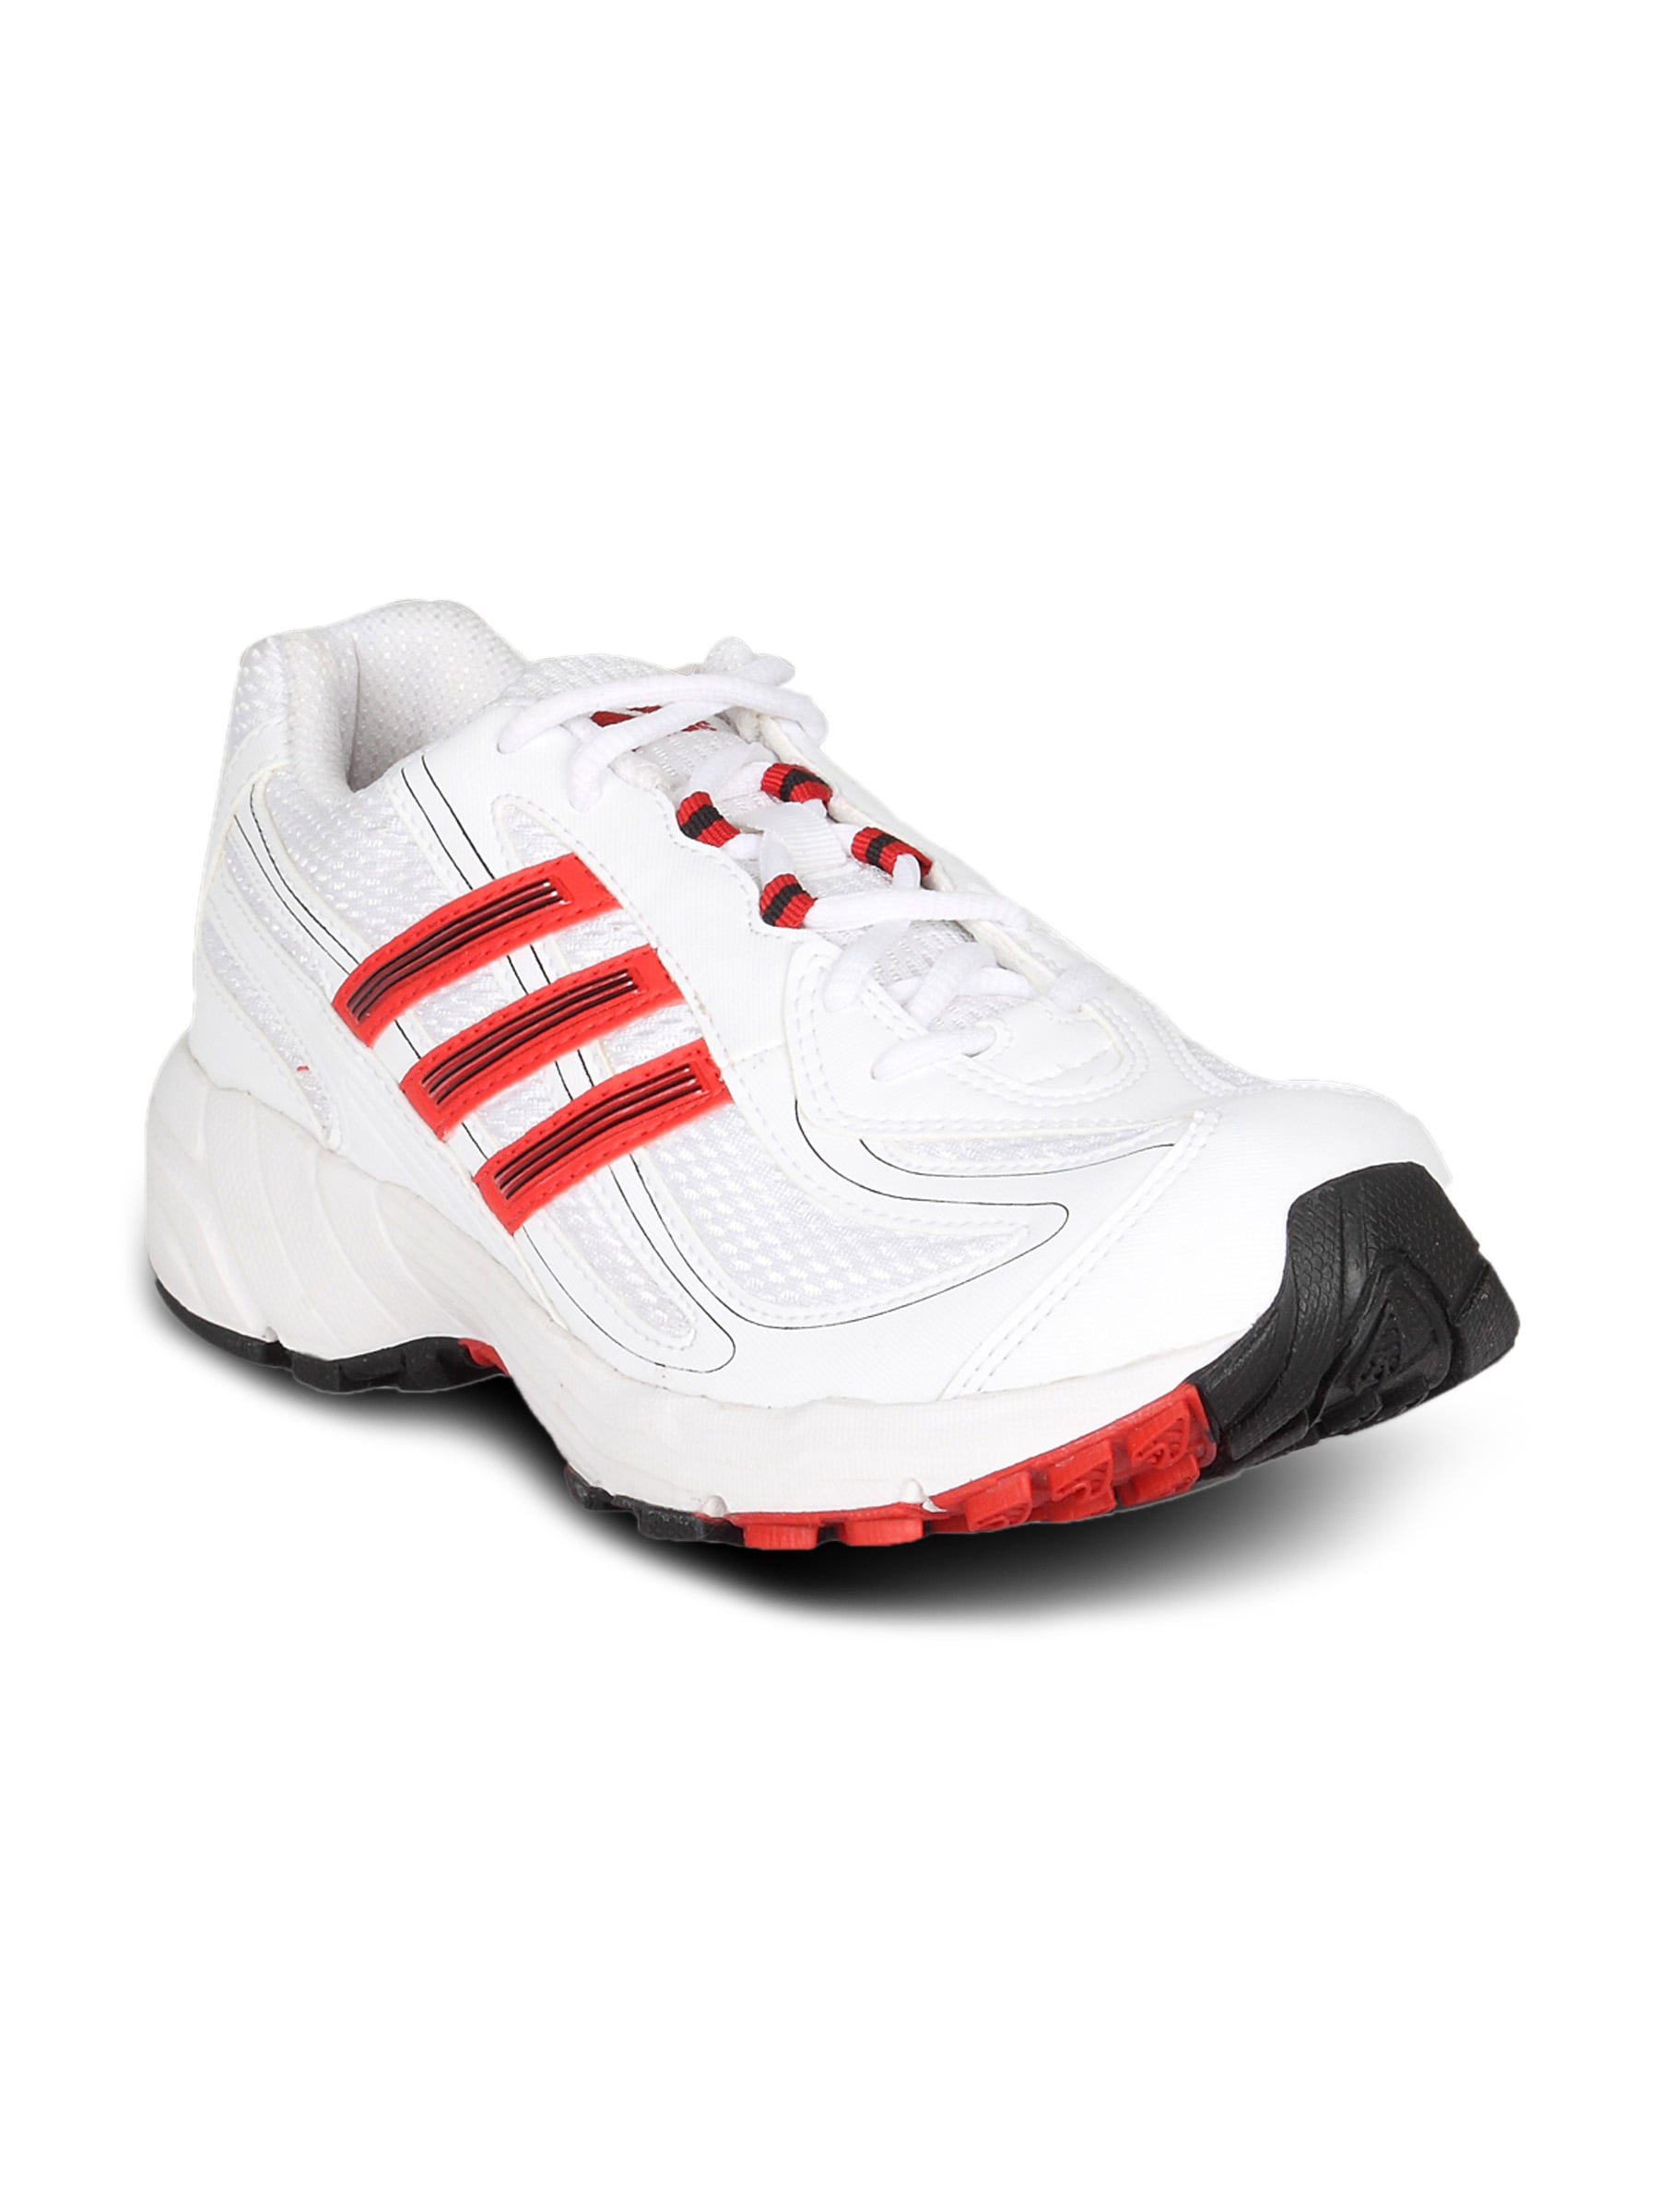 ADIDAS Men's Spector White Red Shoe